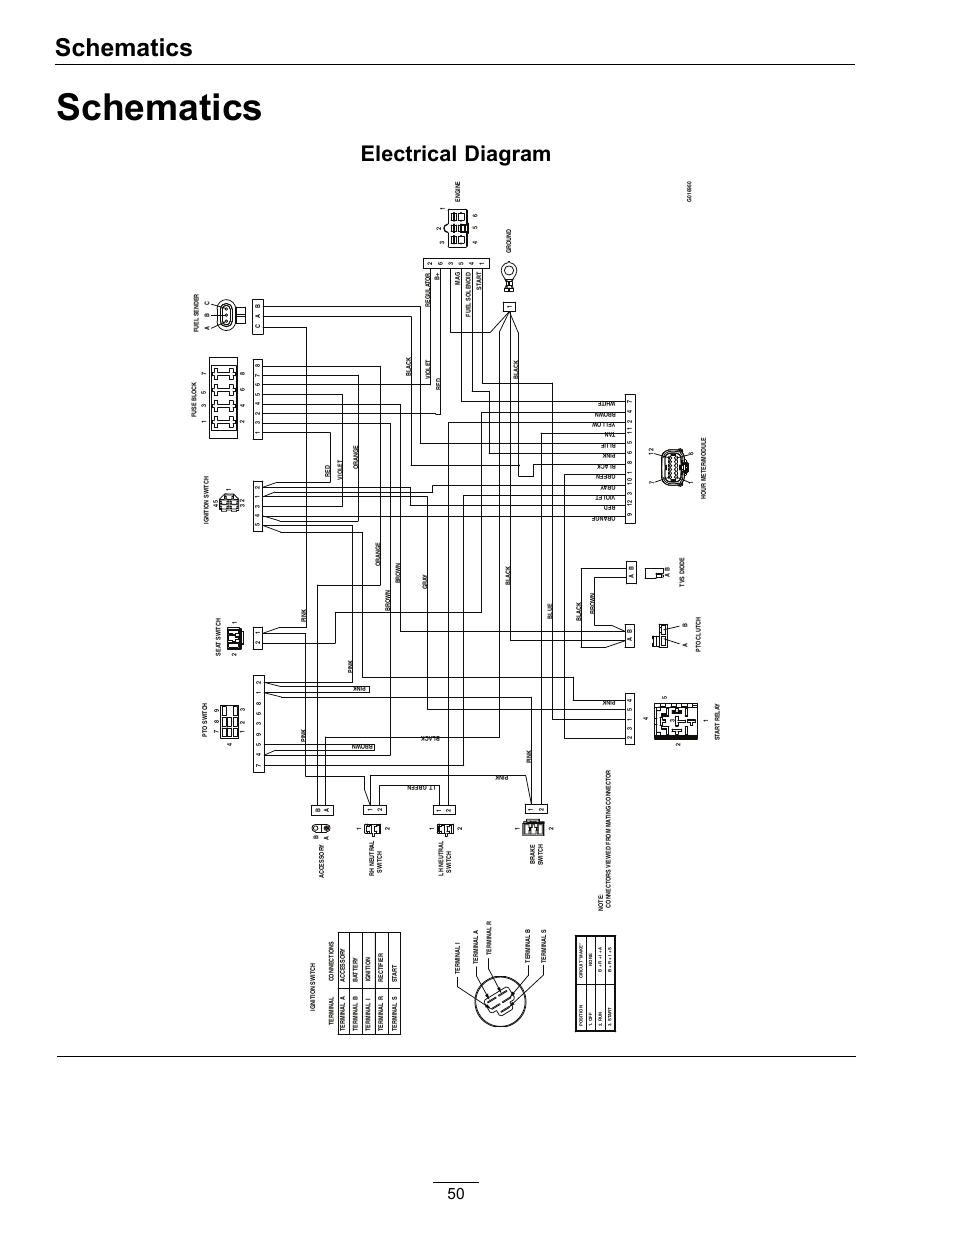 50 amp hubbell twist lock plug wiring diagram